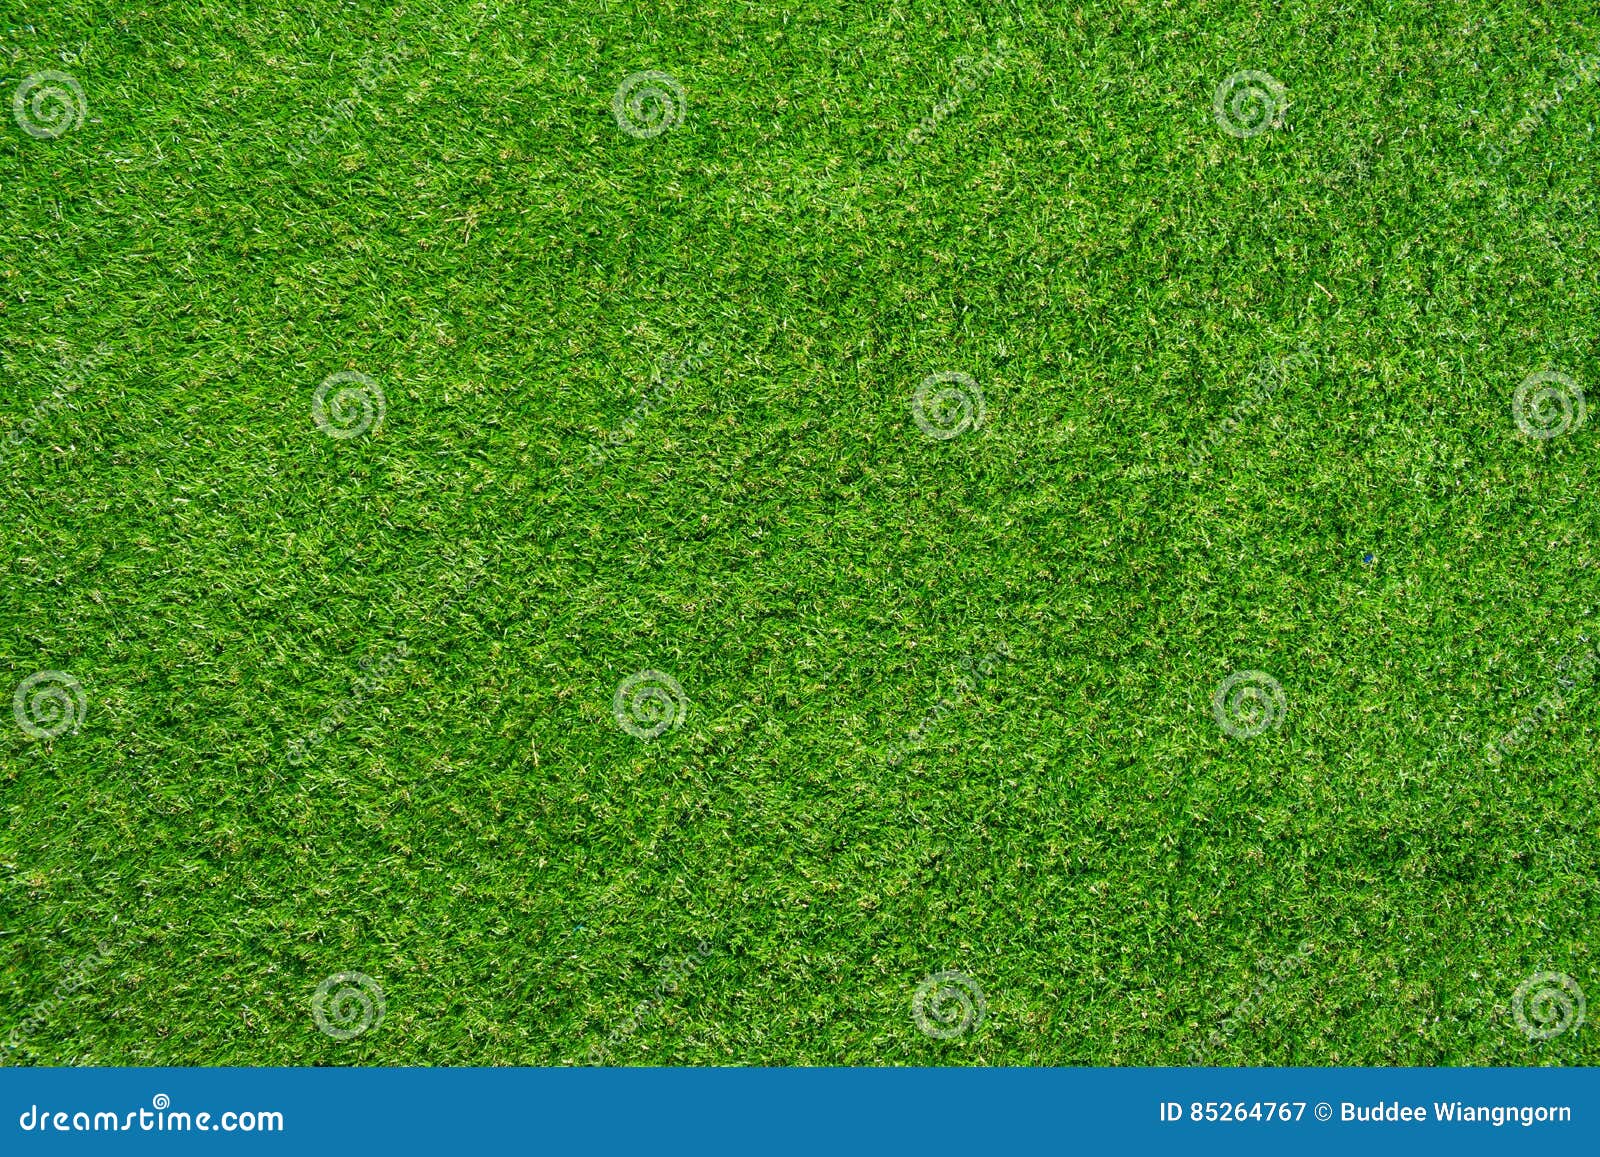 Artificial Grass Stock Image Image Of Design Blue Floor